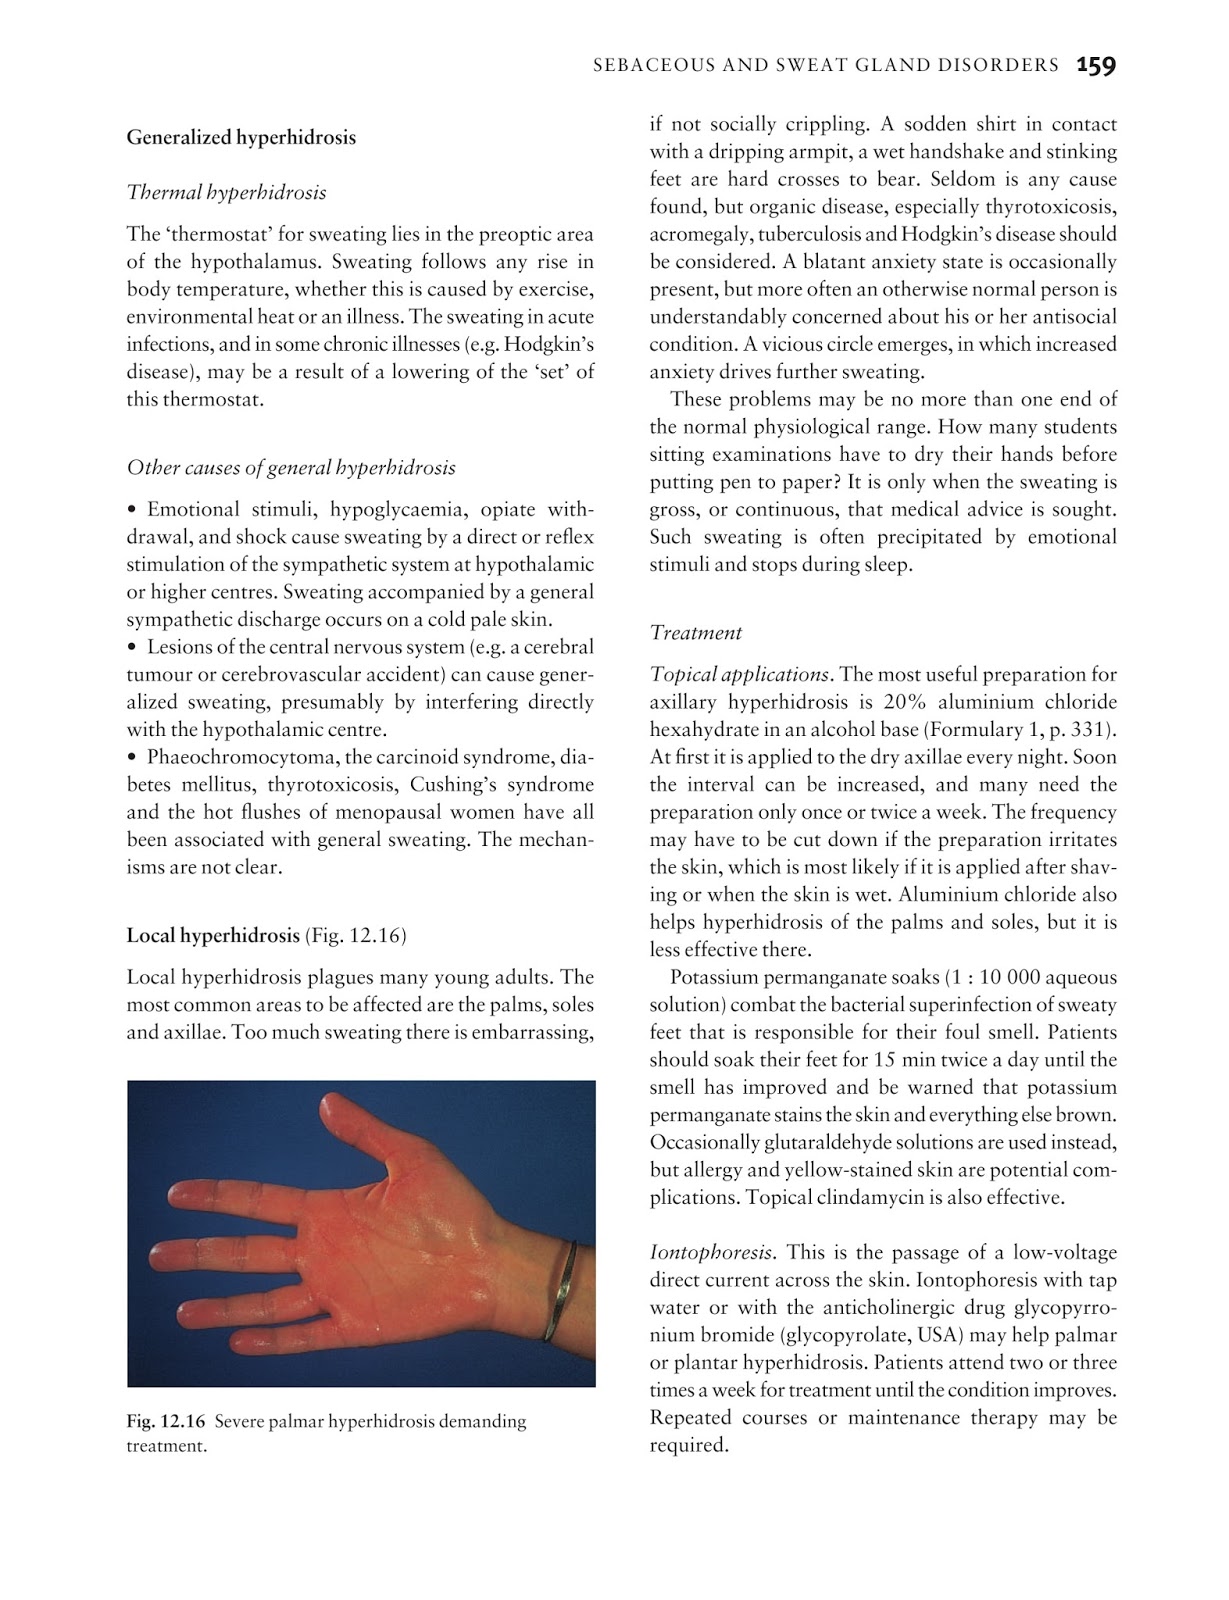 Medicine by Sfakianakis G. Alexandros: Skin disease in perspective 4